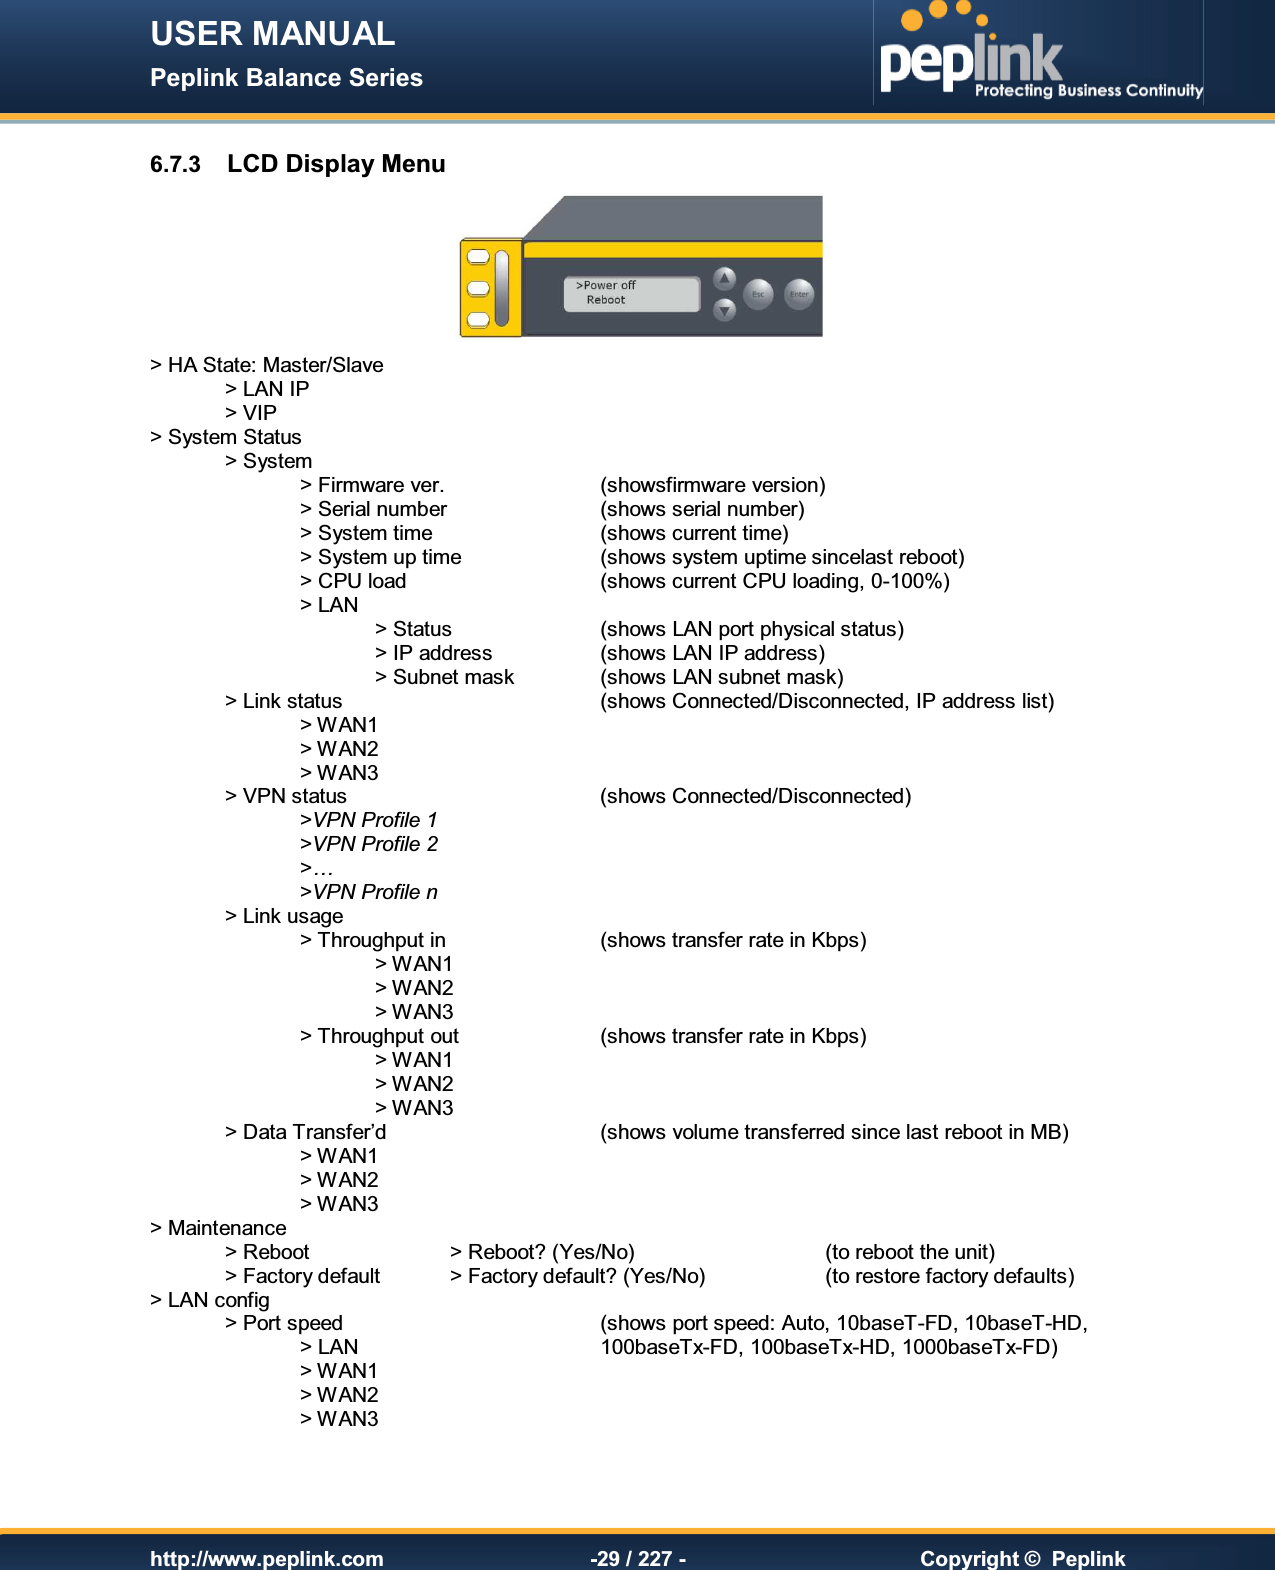 USER MANUAL Peplink Balance Series   http://www.peplink.com -29 / 227 -  Copyright ©  Peplink 6.7.3  LCD Display Menu  &gt; HA State: Master/Slave   &gt; LAN IP   &gt; VIP &gt; System Status     &gt; System         &gt; Firmware ver.     (showsfirmware version)     &gt; Serial number     (shows serial number)     &gt; System time      (shows current time)     &gt; System up time    (shows system uptime sincelast reboot)     &gt; CPU load      (shows current CPU loading, 0-100%)     &gt; LAN         &gt; Status    (shows LAN port physical status)       &gt; IP address    (shows LAN IP address)       &gt; Subnet mask    (shows LAN subnet mask)   &gt; Link status        (shows Connected/Disconnected, IP address list)     &gt; WAN1         &gt; WAN2     &gt; WAN3   &gt; VPN status        (shows Connected/Disconnected)     &gt;VPN Profile 1     &gt;VPN Profile 2     &gt;…     &gt;VPN Profile n   &gt; Link usage       &gt; Throughput in     (shows transfer rate in Kbps)       &gt; WAN1         &gt; WAN2       &gt; WAN3     &gt; Throughput out    (shows transfer rate in Kbps)       &gt; WAN1           &gt; WAN2       &gt; WAN3  &gt; Data Transfer’d      (shows volume transferred since last reboot in MB)     &gt; WAN1     &gt; WAN2     &gt; WAN3 &gt; Maintenance     &gt; Reboot    &gt; Reboot? (Yes/No)      (to reboot the unit)   &gt; Factory default  &gt; Factory default? (Yes/No)    (to restore factory defaults)  &gt; LAN config     &gt; Port speed        (shows port speed: Auto, 10baseT-FD, 10baseT-HD,     &gt; LAN        100baseTx-FD, 100baseTx-HD, 1000baseTx-FD)     &gt; WAN1           &gt; WAN2     &gt; WAN3  